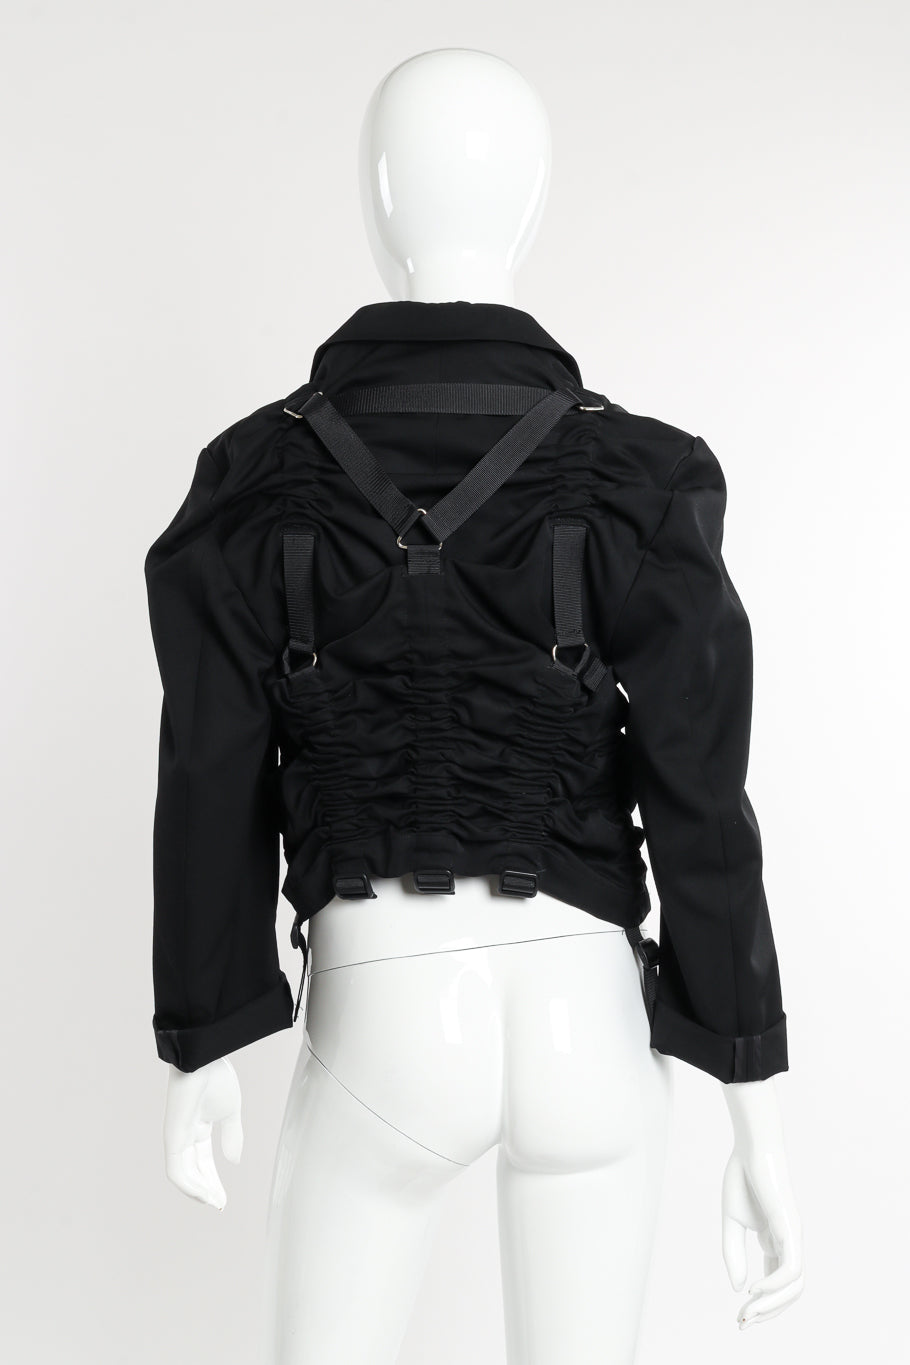 Junya Watanabe 2003 S/S Parachute Harness Jacket back on mannequin @recessla